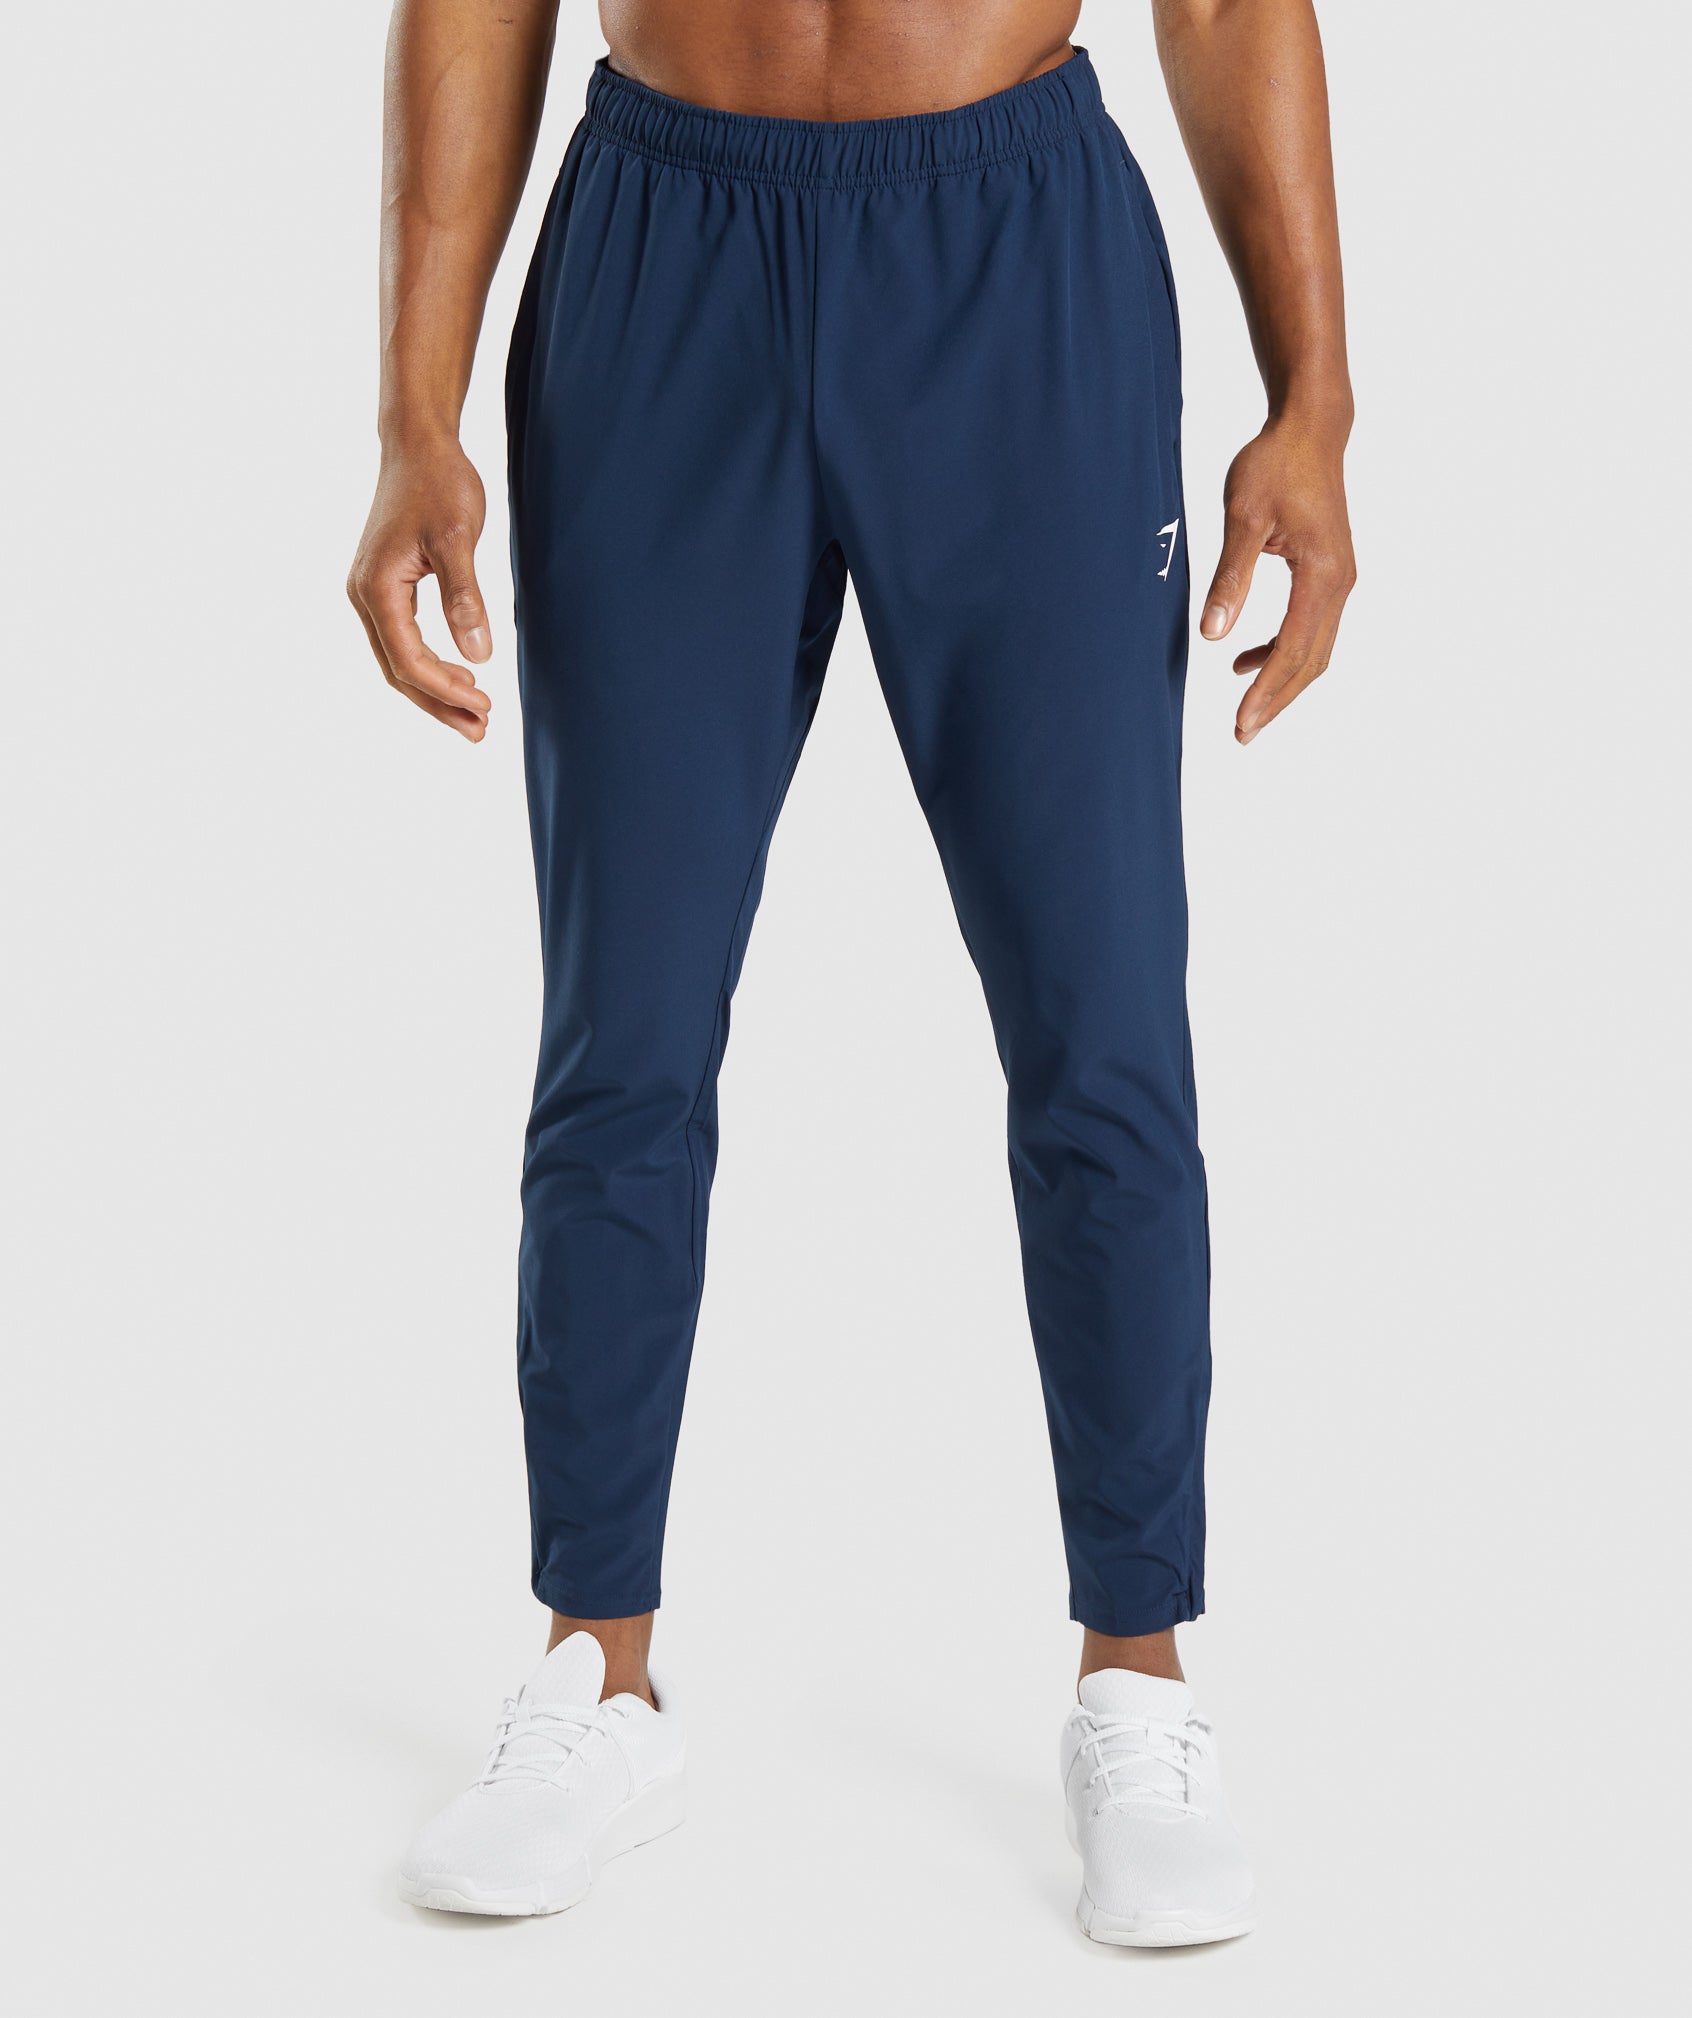 World Sports Men Lower, Sportswear & Gym wear NS Lycra Fabric Combo Pack of  3 (Royal Blue, Grey, Navy Blue)